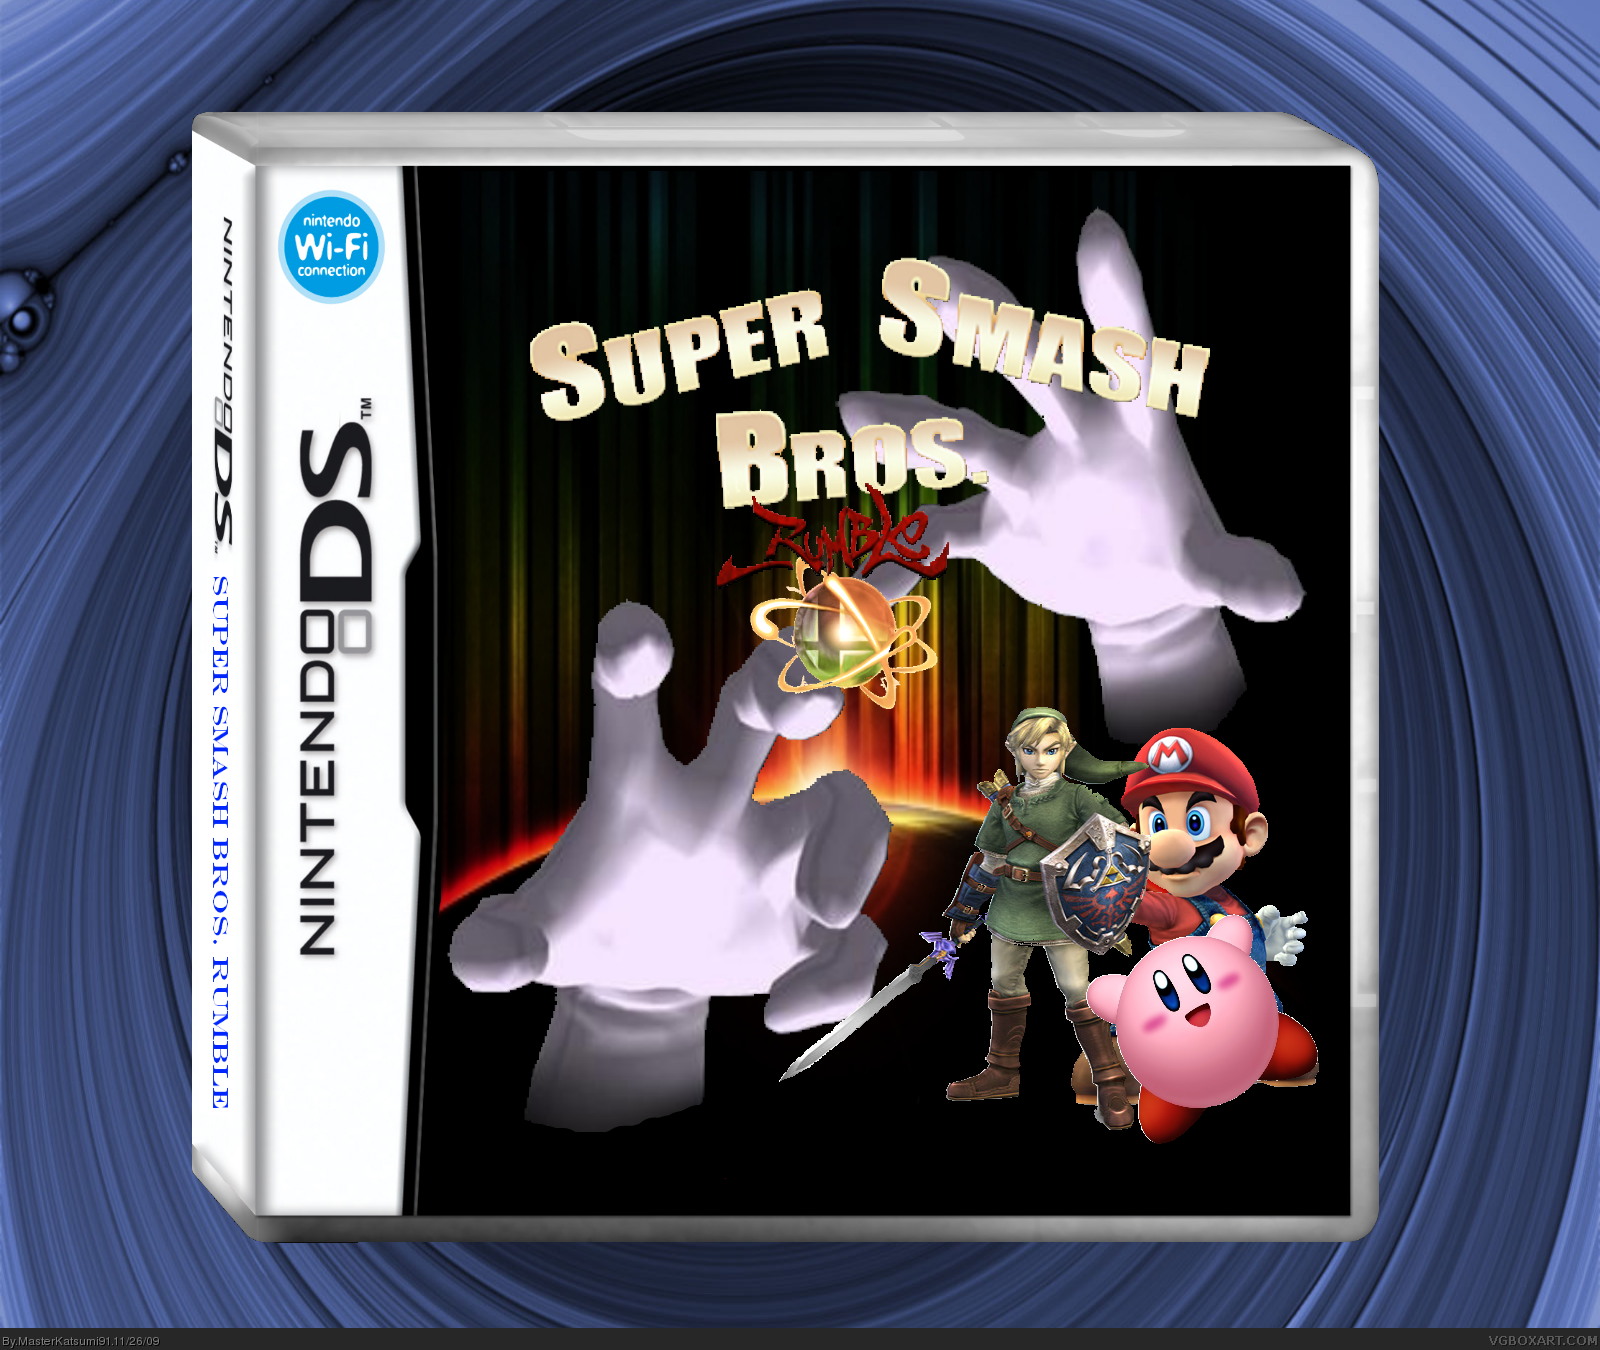 Super Smash Bros Rumble box cover